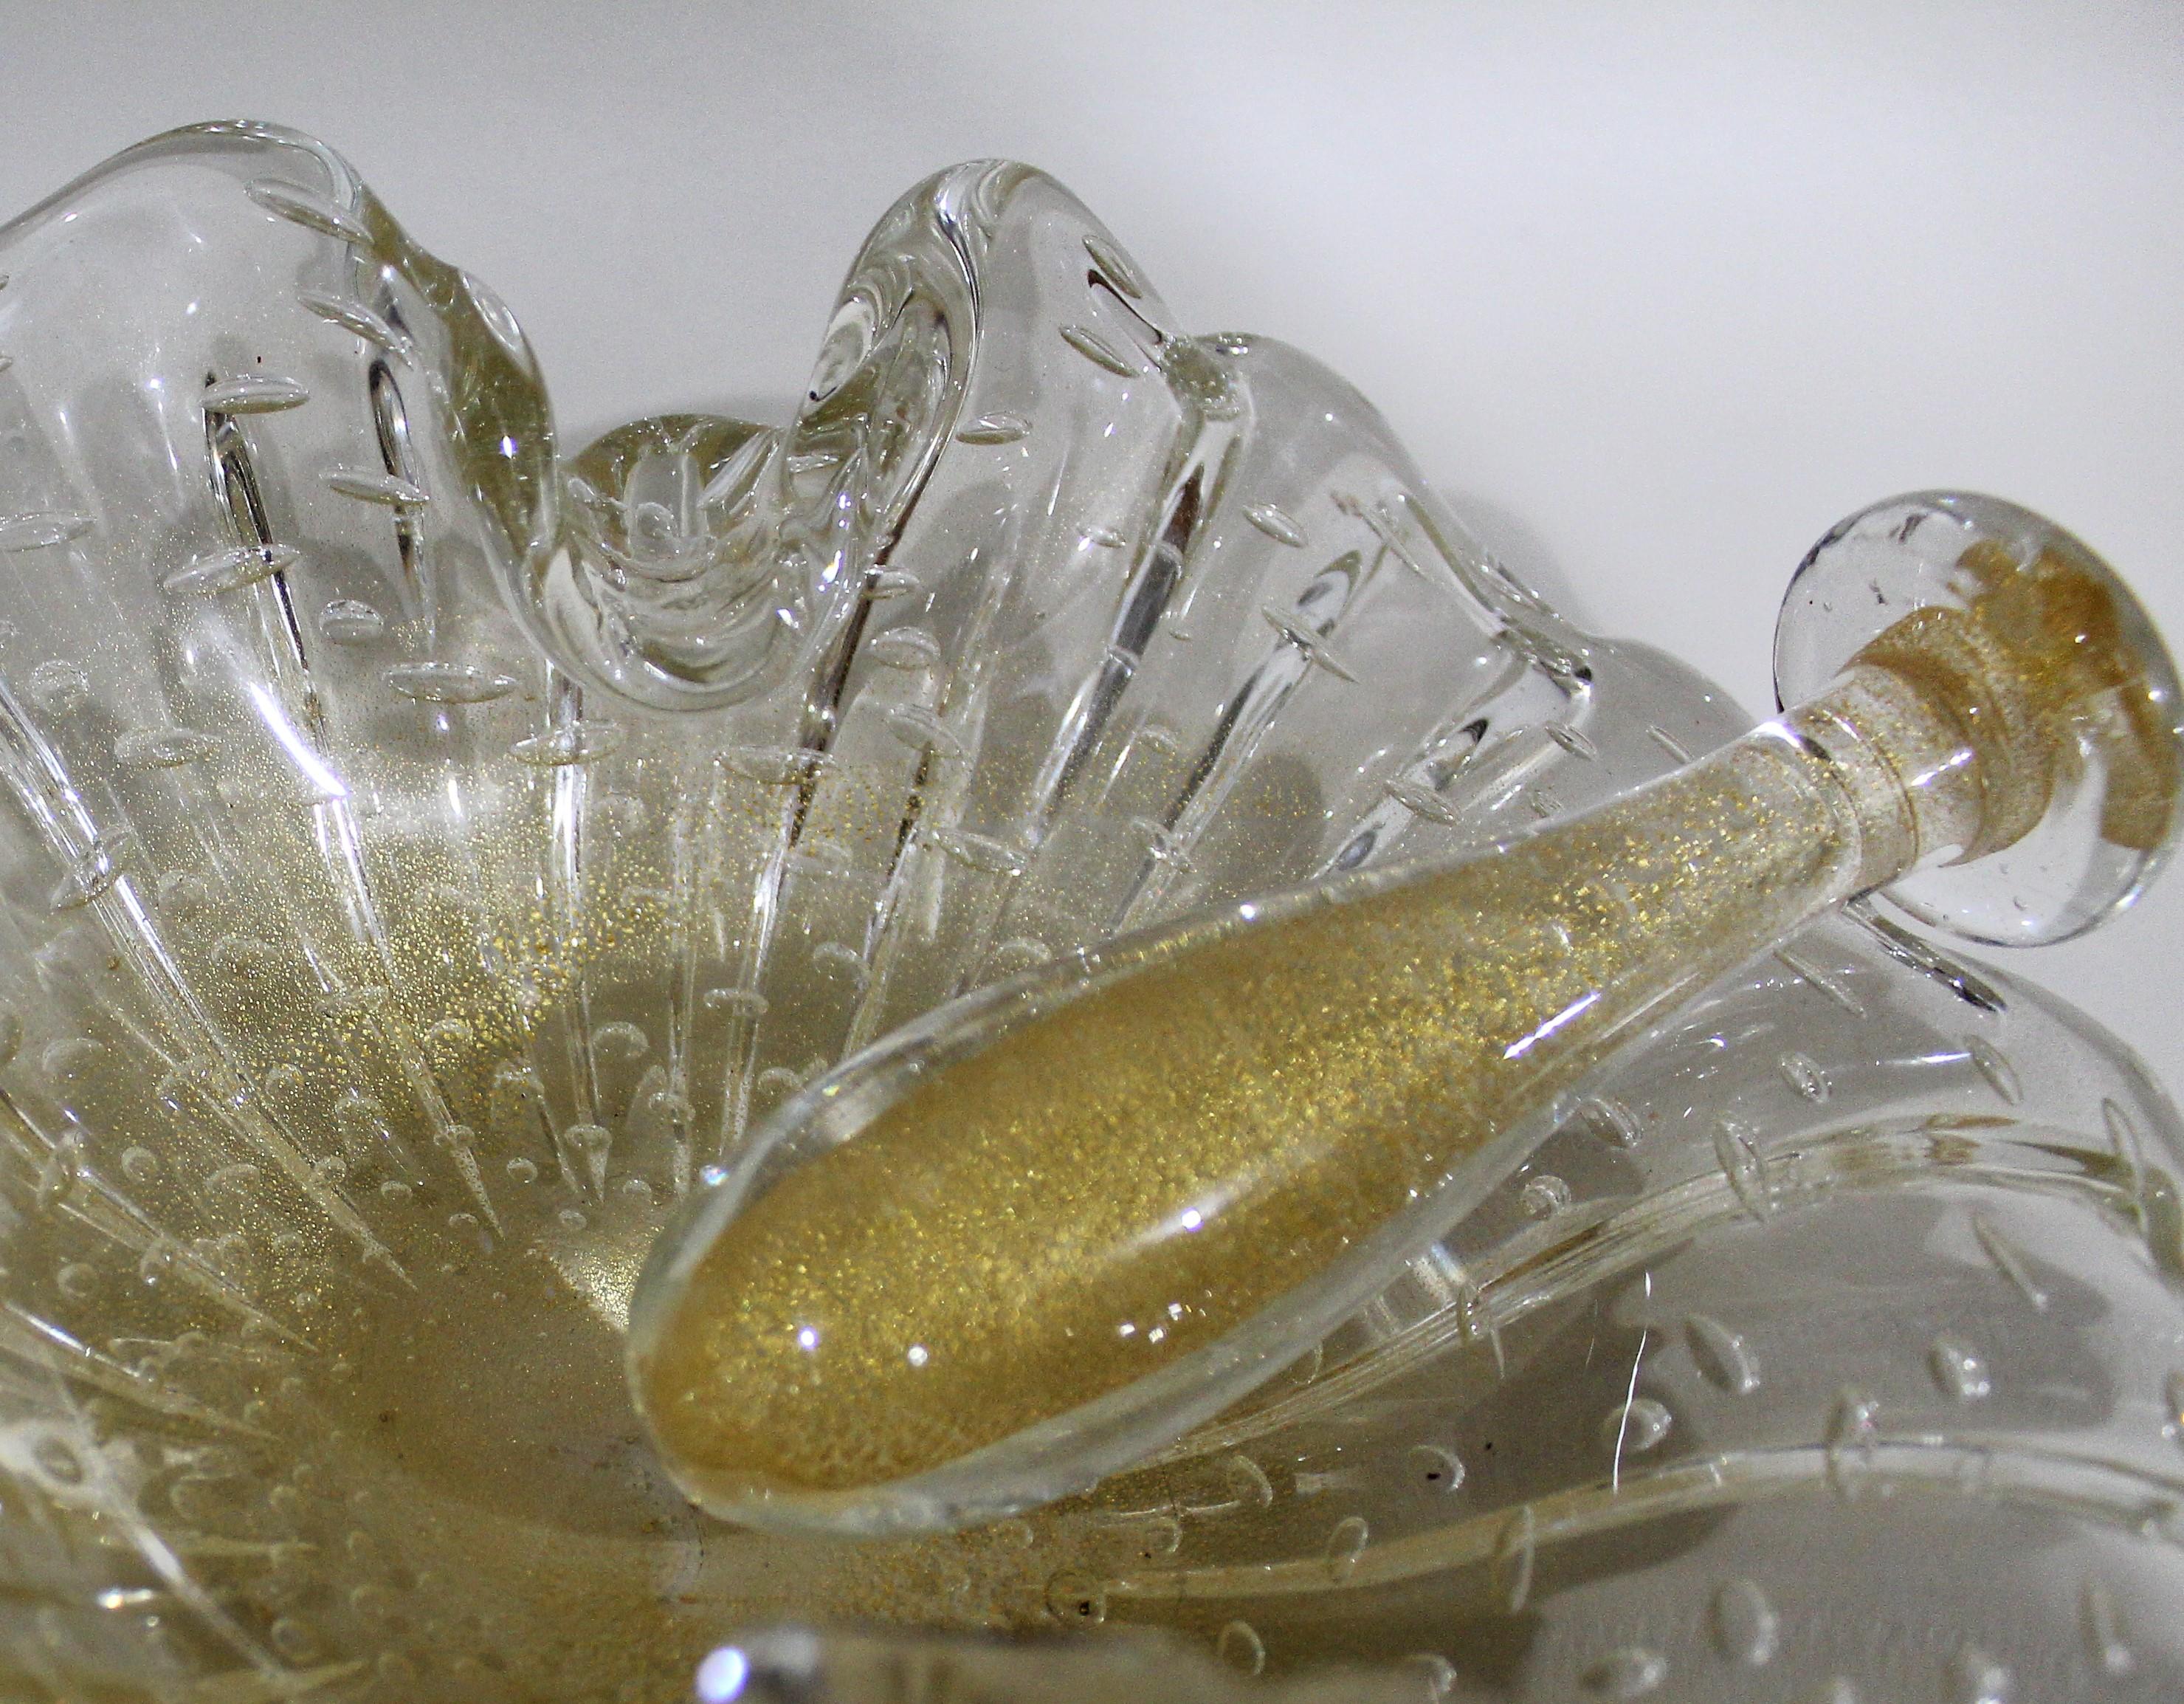 Murano glass mortar and pestle with gold flecks.